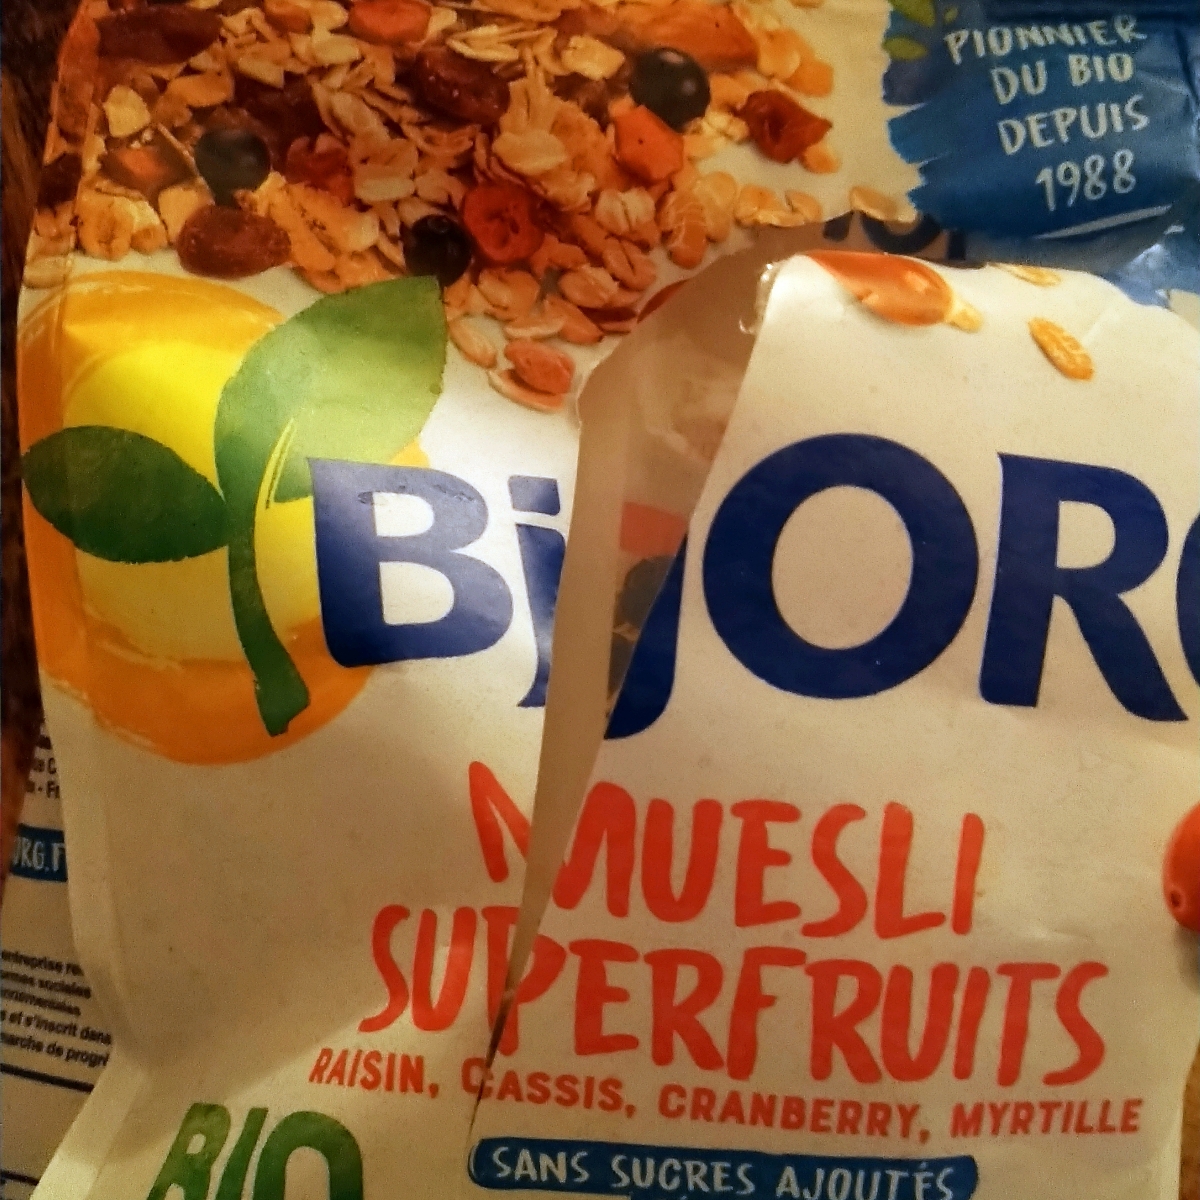 Bjorg Muesli Superfruits Reviews